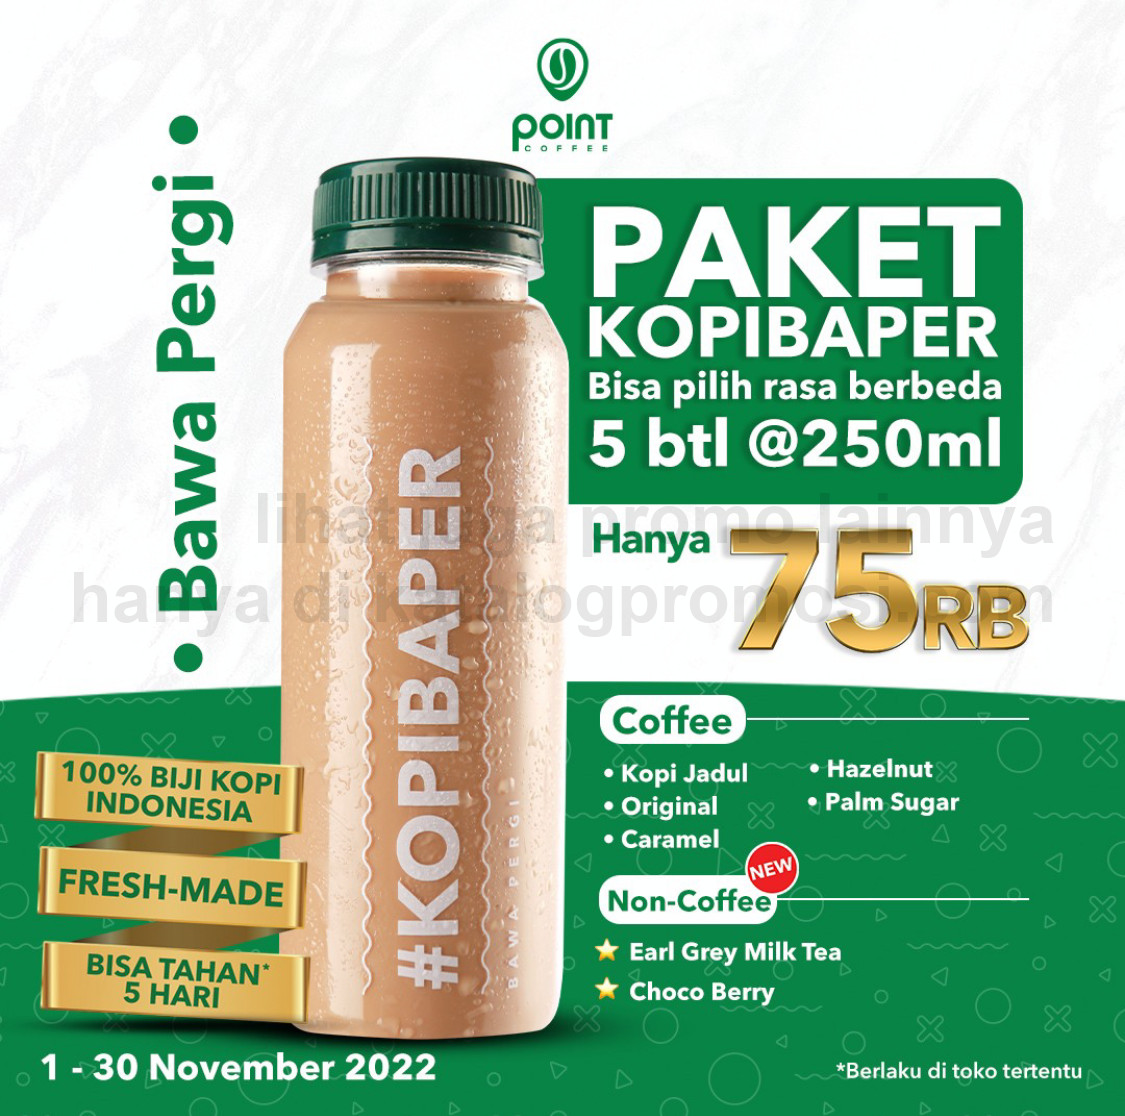 POINT COFFEE Promo PAKET KOPIBAPER - Harga Spesial 5btl hanya Rp. 75.000